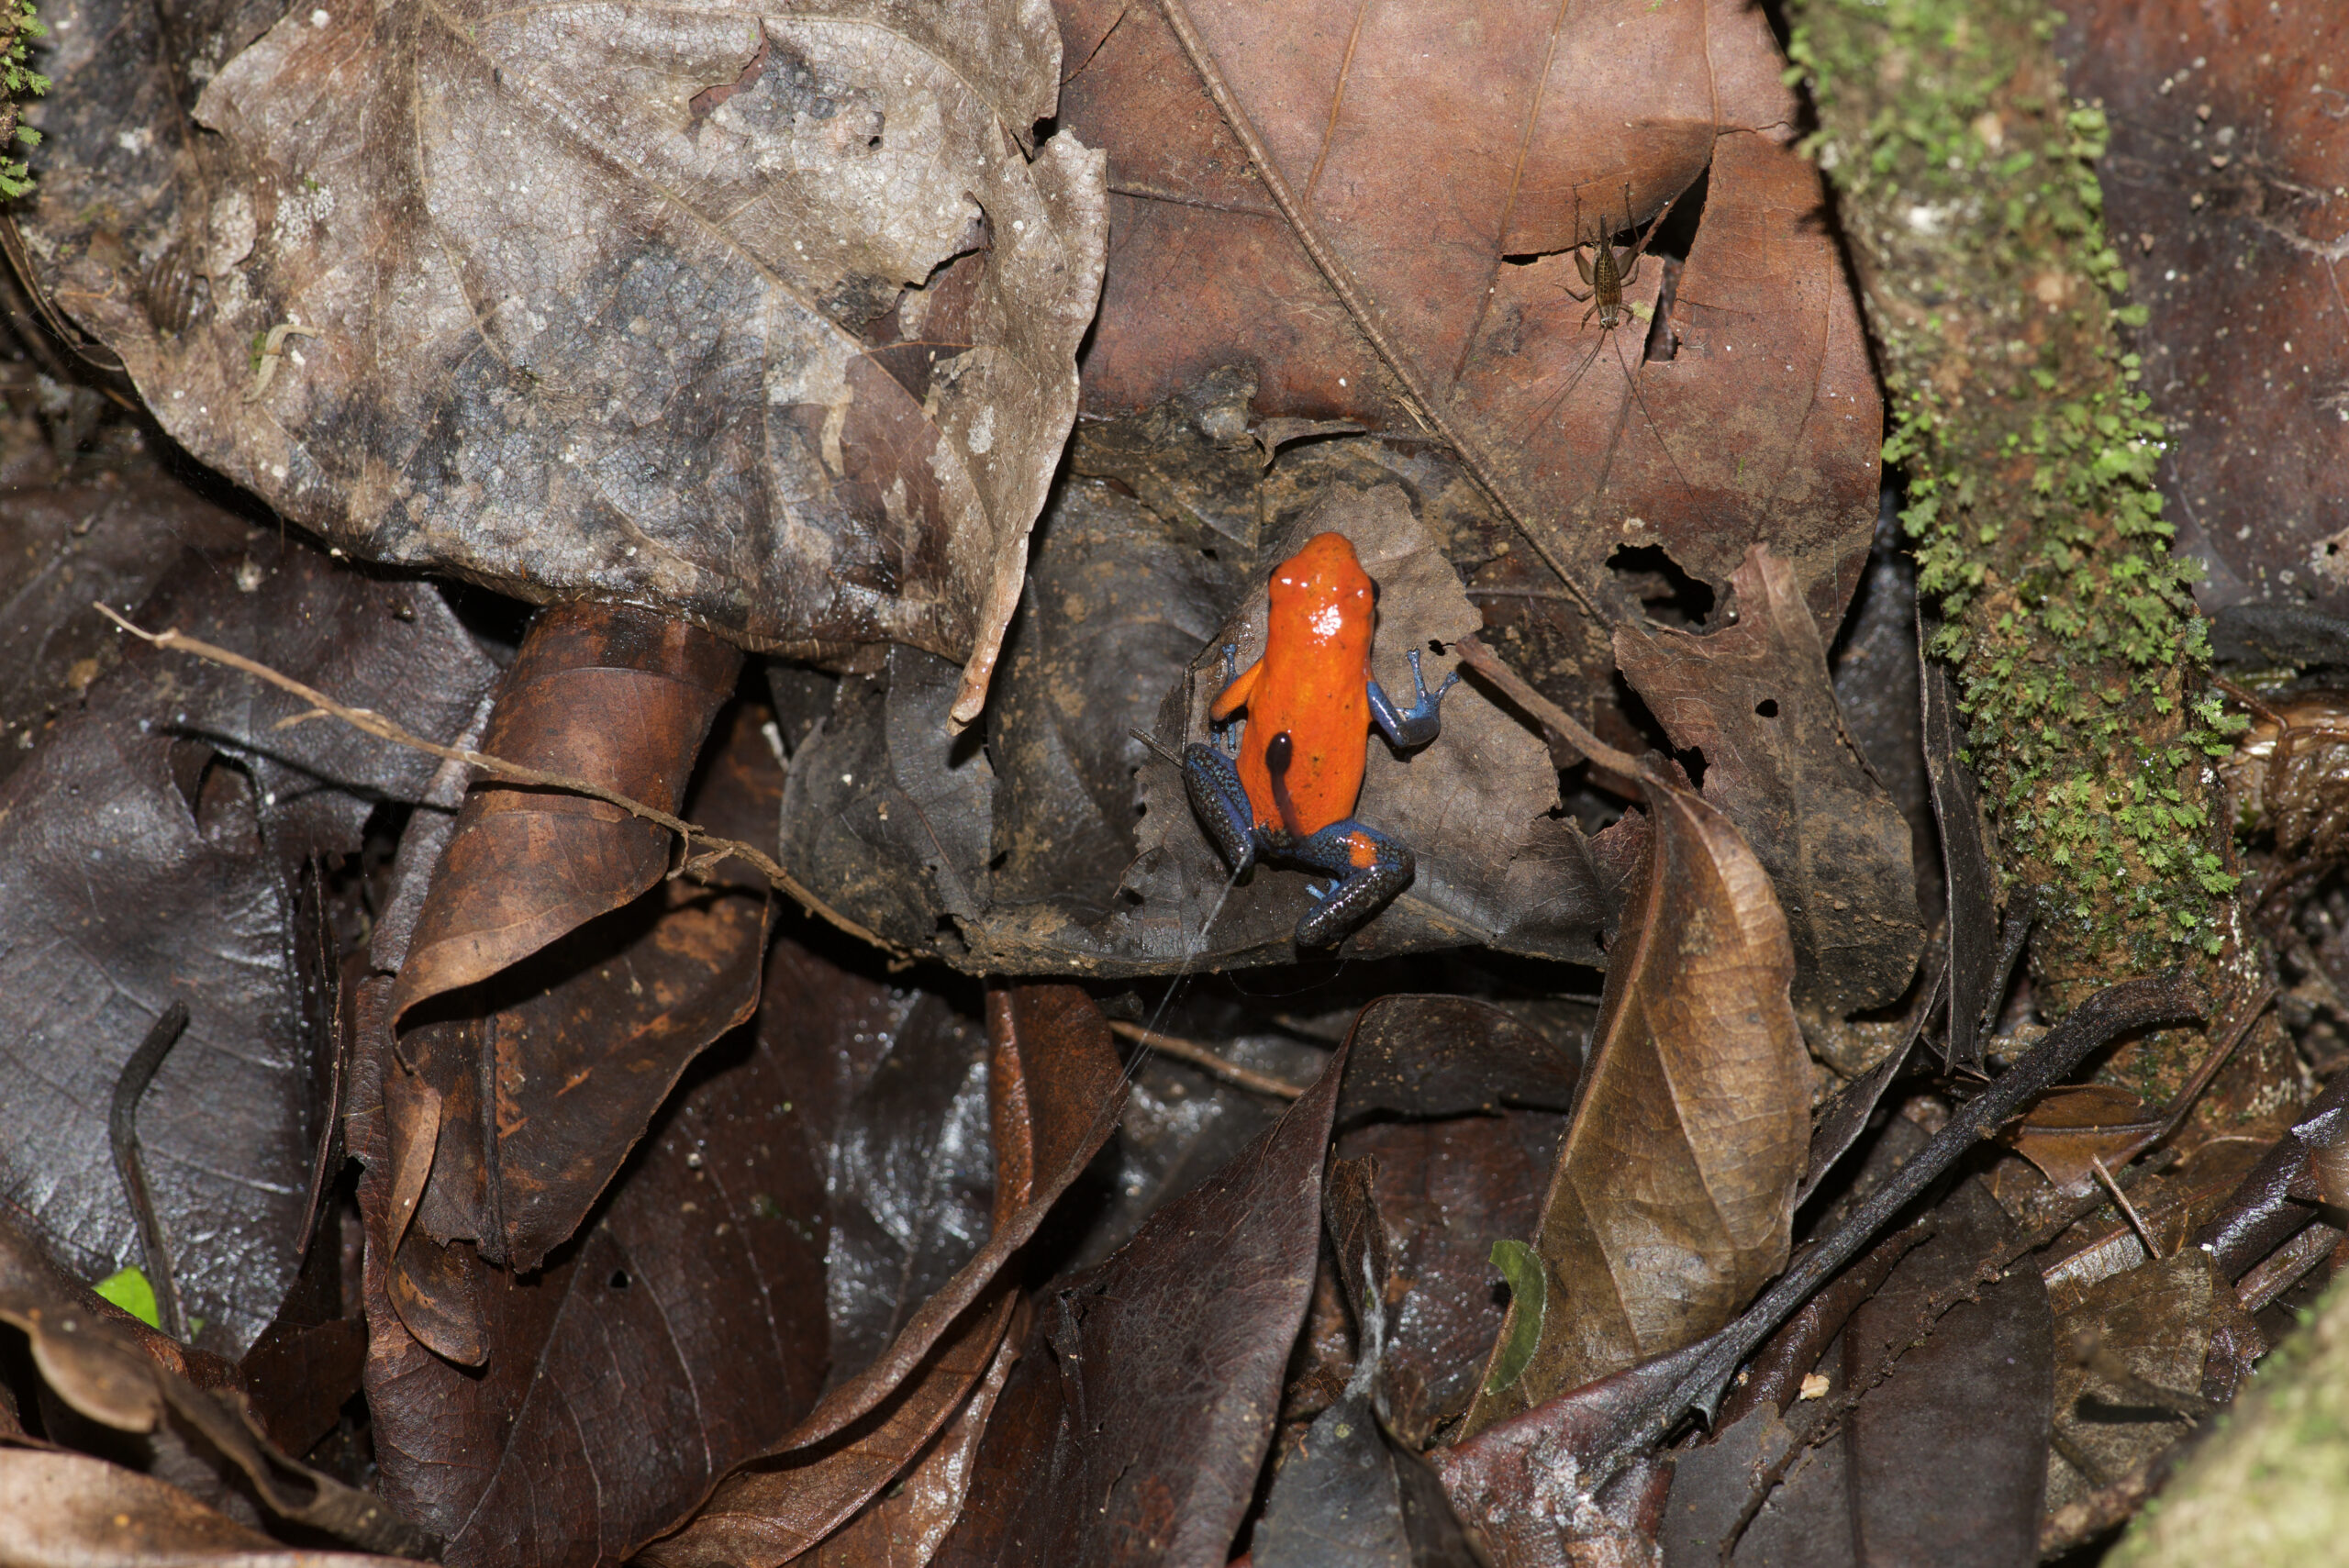 Oophaga pumilio with tadpole from Fortuna, Costa Rica - by E. Van Heygen.